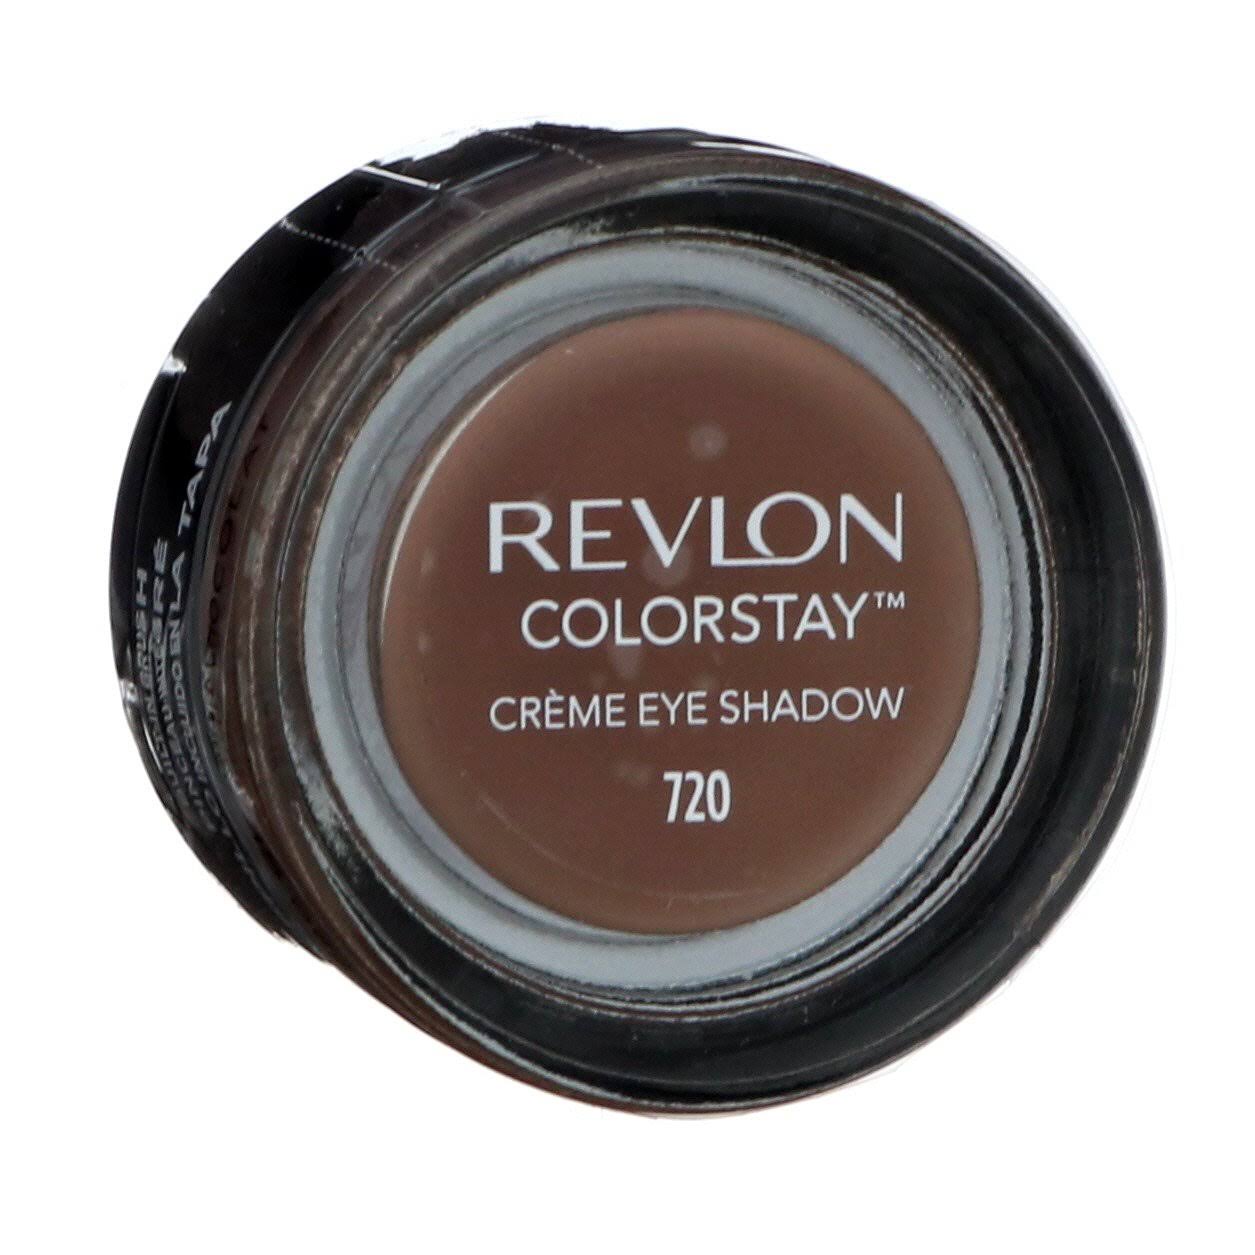 Revlon Colorstay Creme Eye Shadow - 720 Chocolate